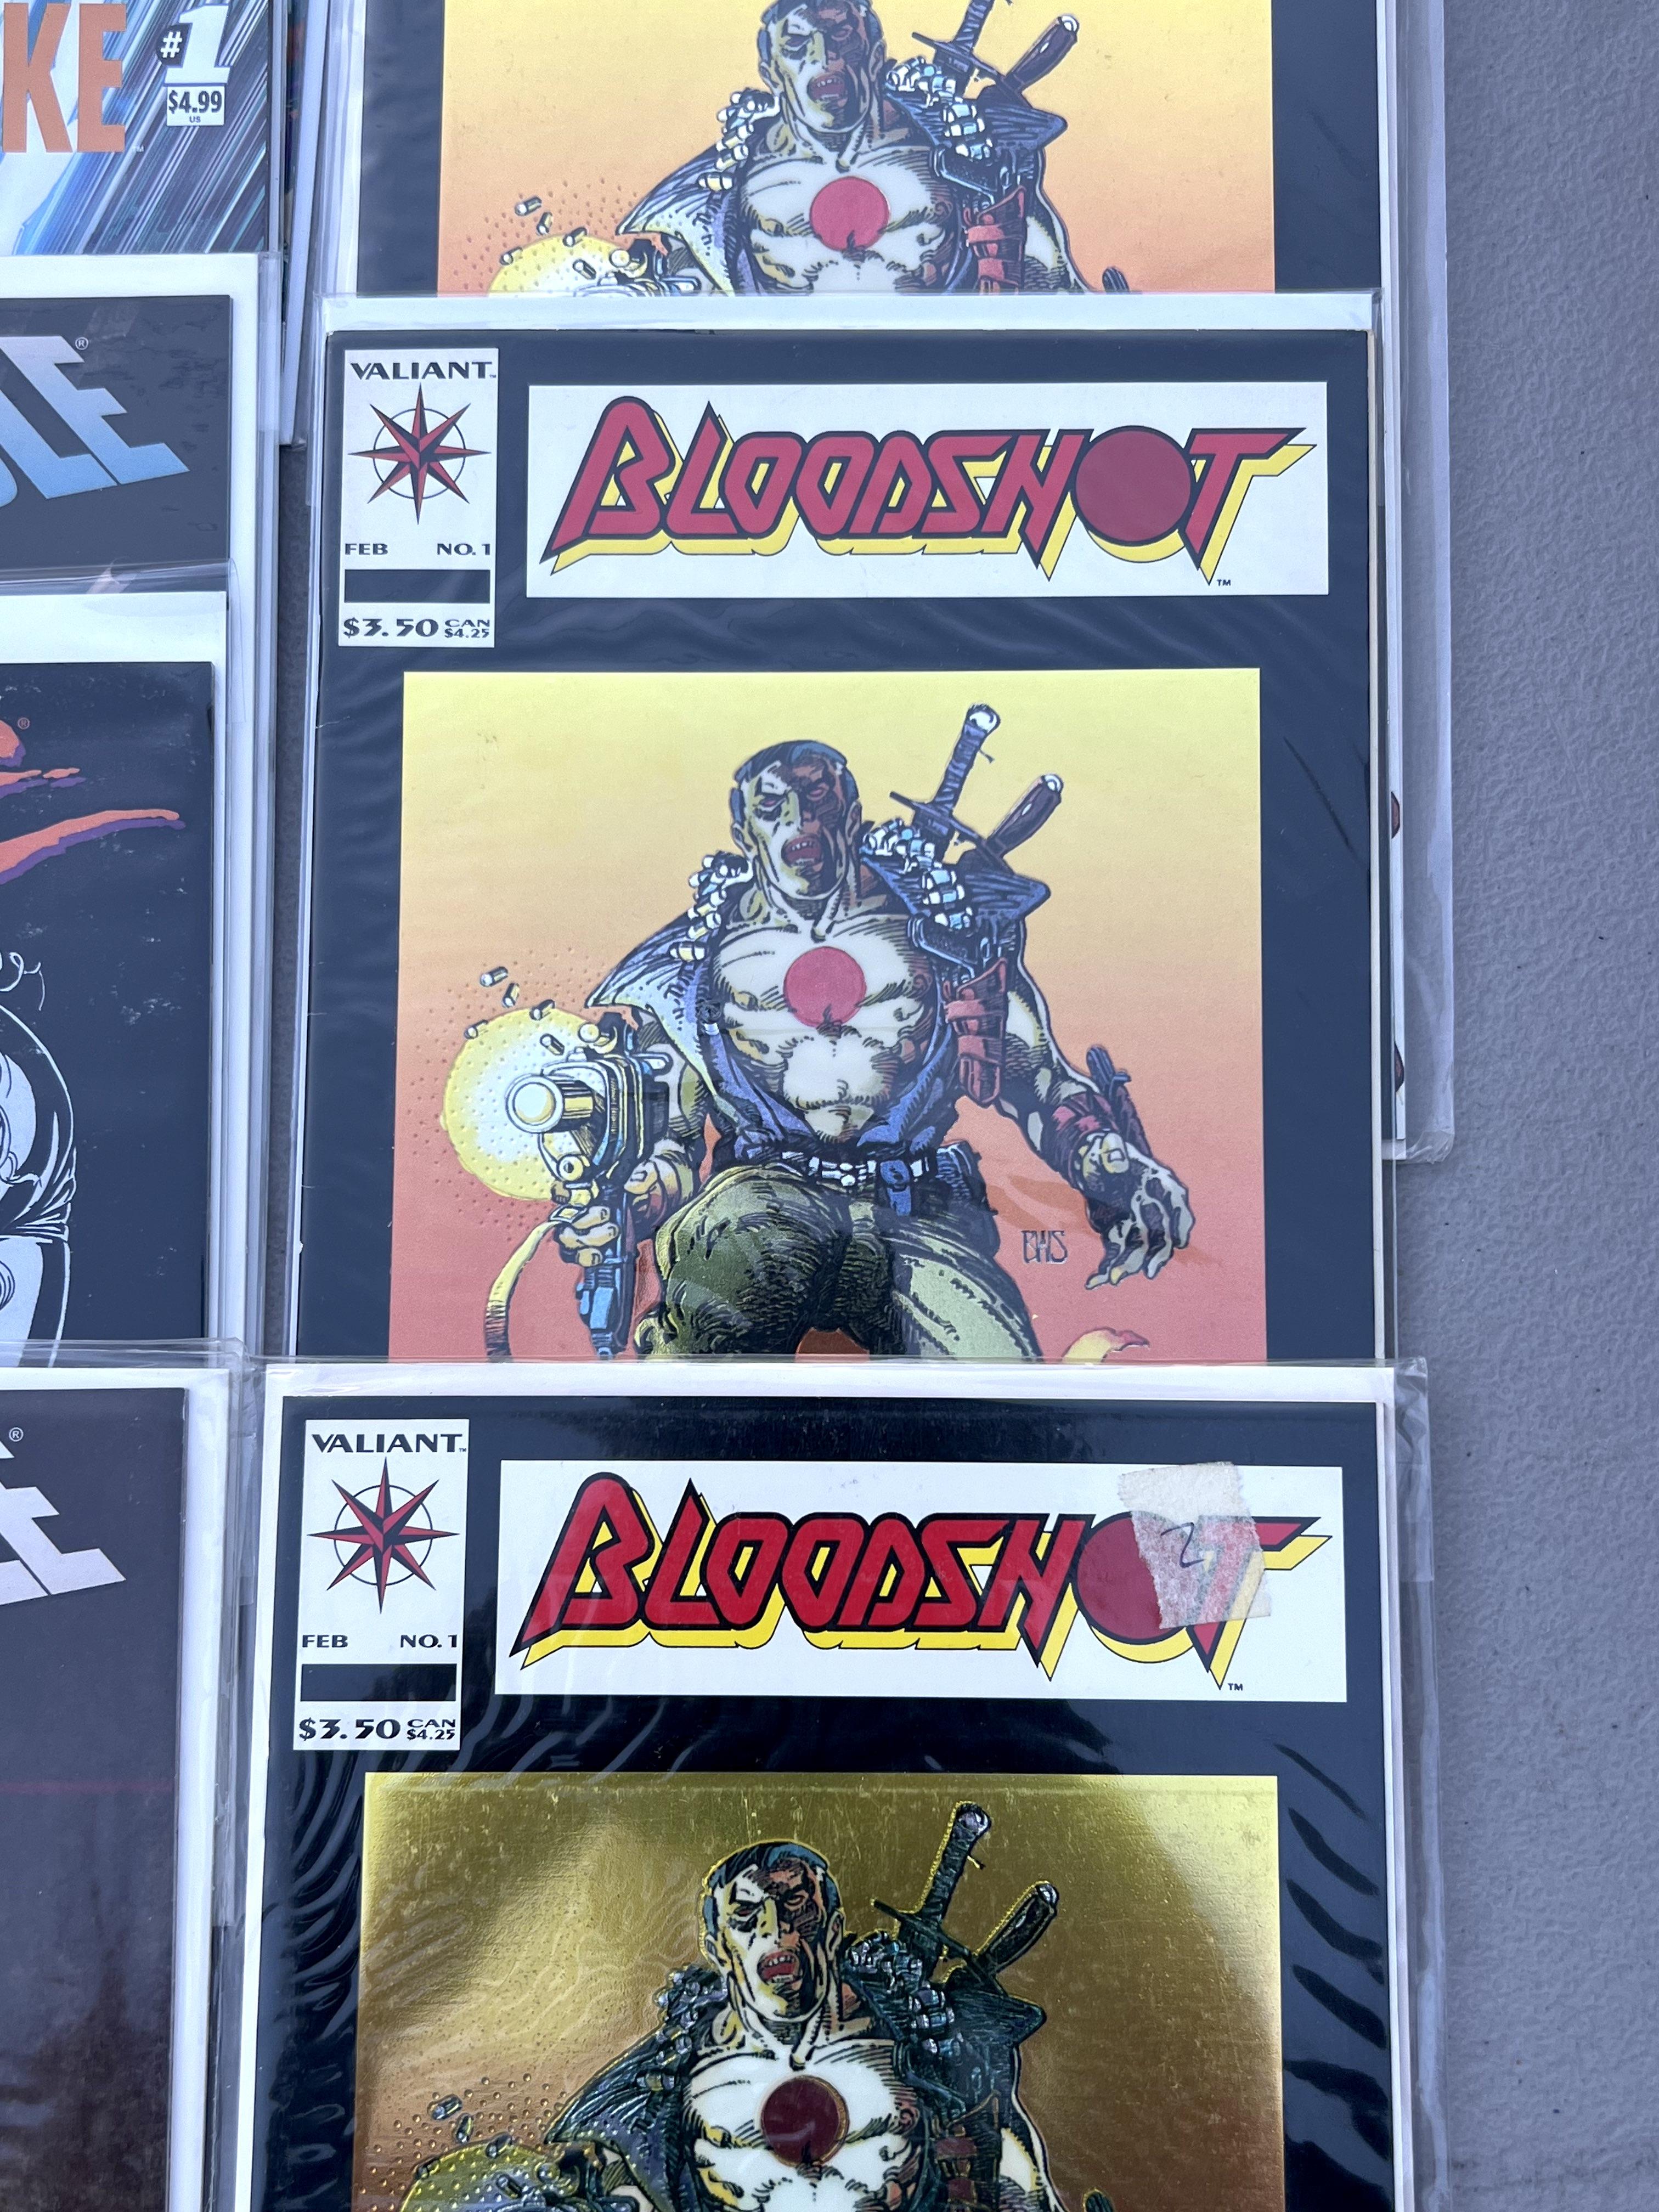 Comic Book Cable Bloodshot Deathlok Avengers collection lot 20